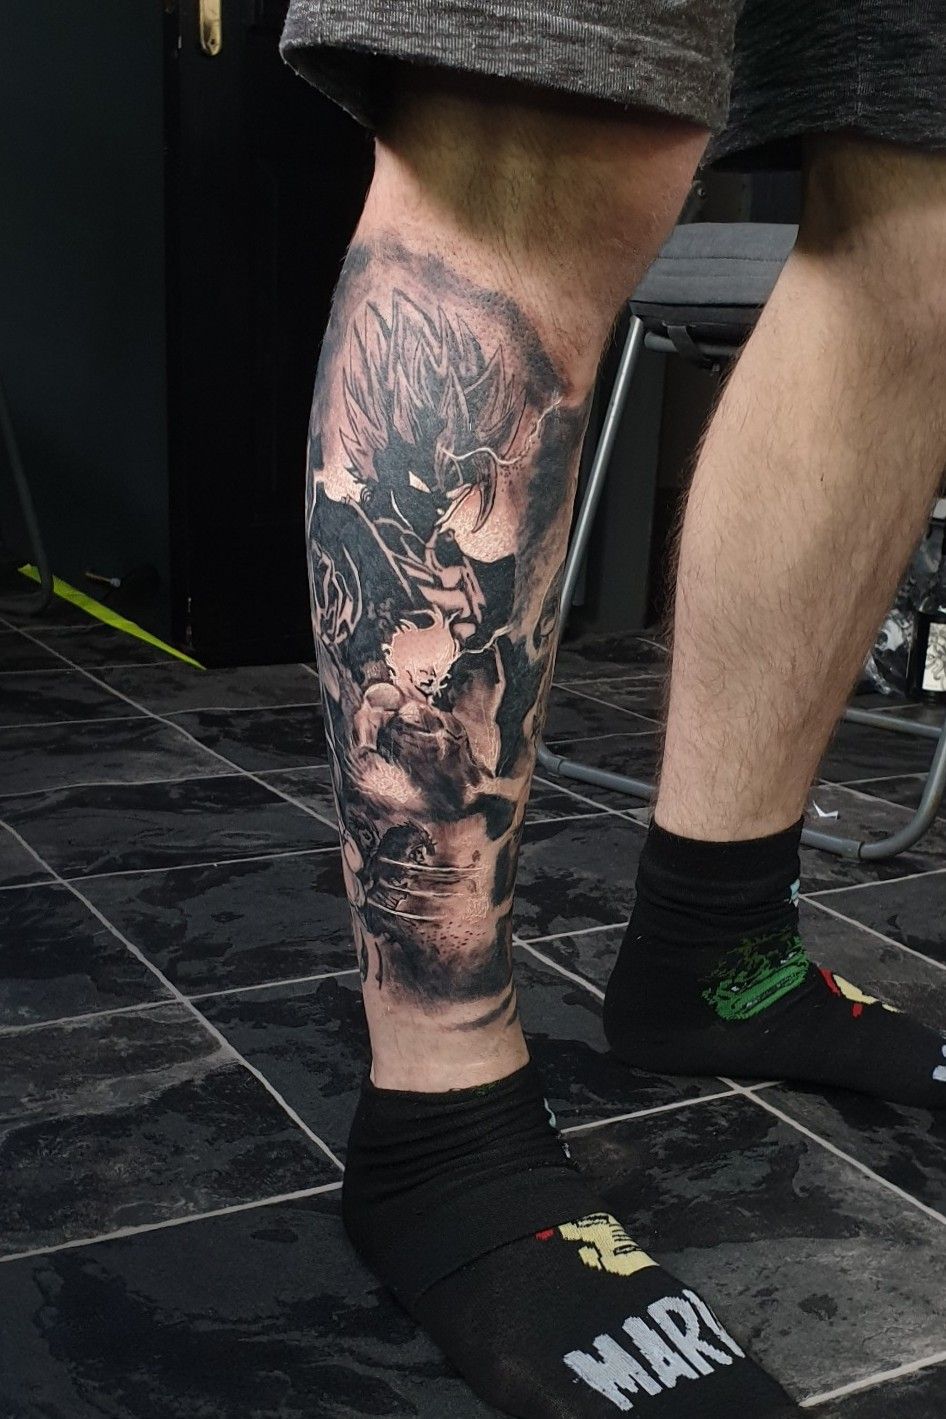 Lower Leg Sleeve Tattoo